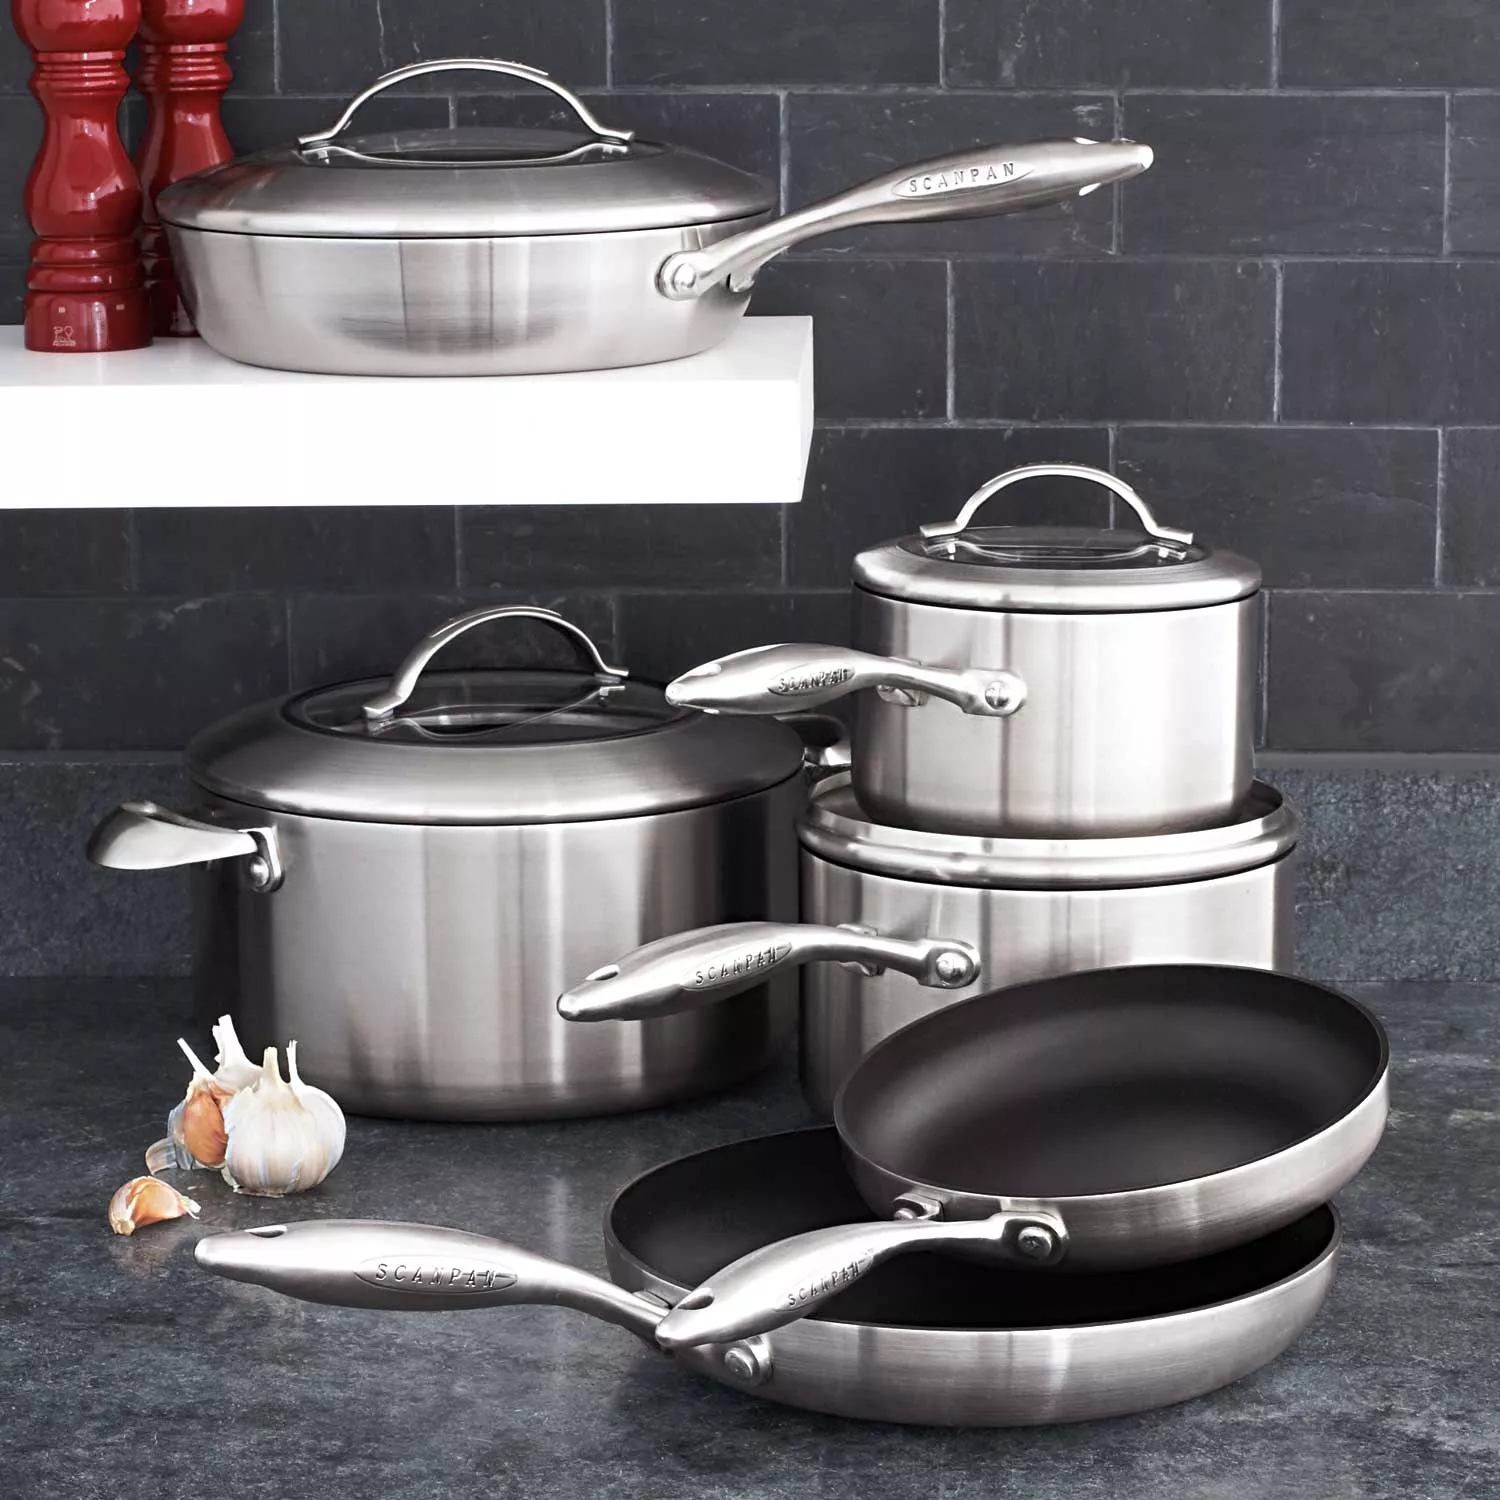 Hot Chef 10-Pcs Aluminium Marble Coating Nonstick Kitchenware